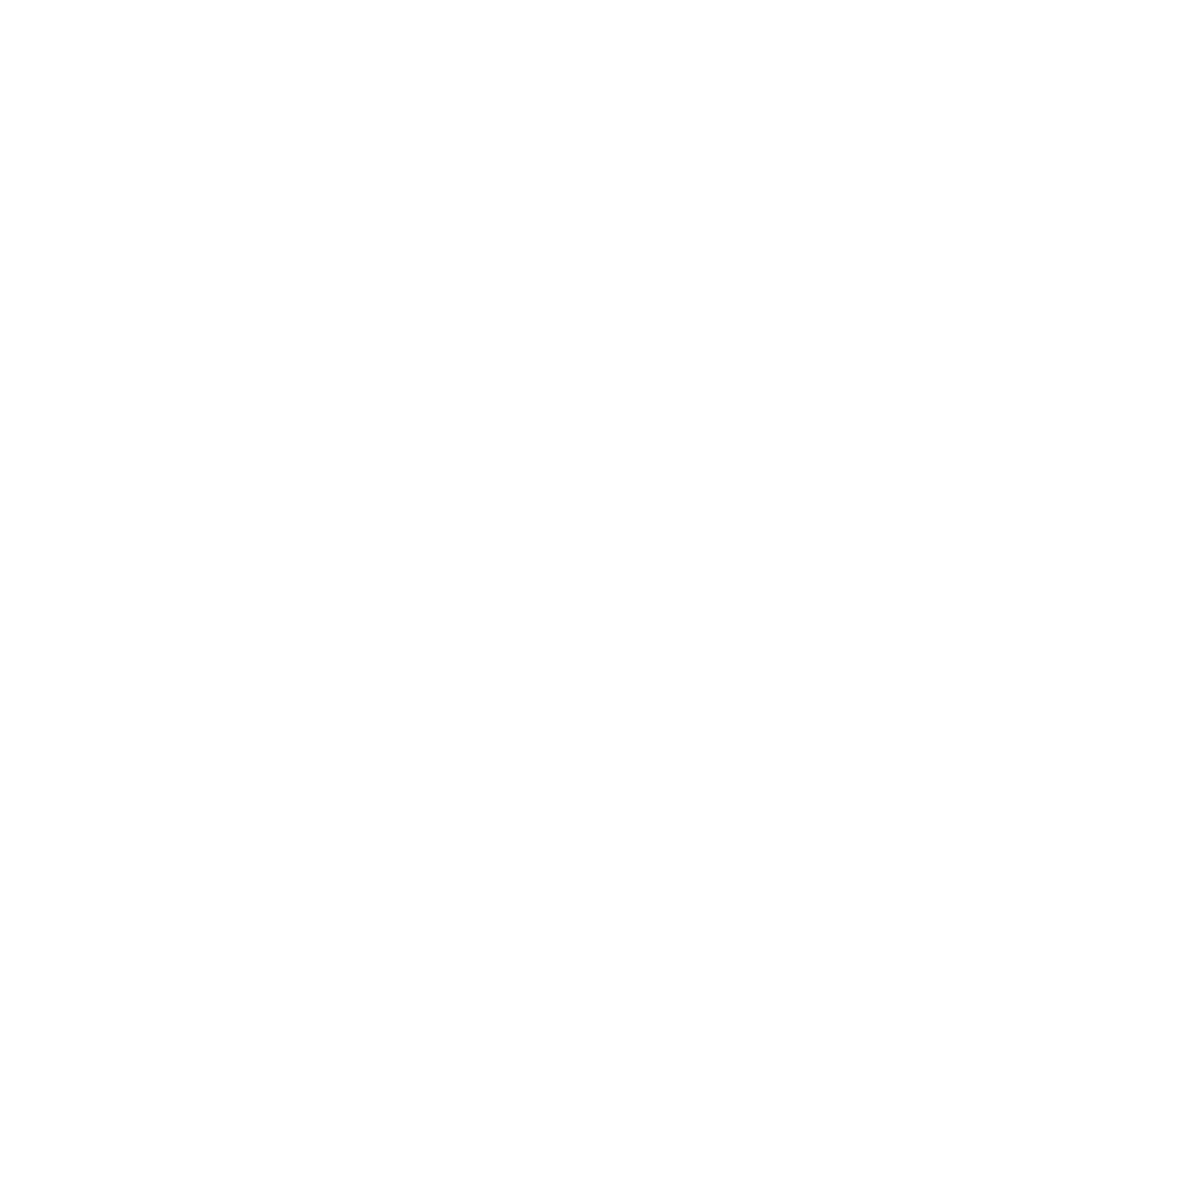 Powerline Networking